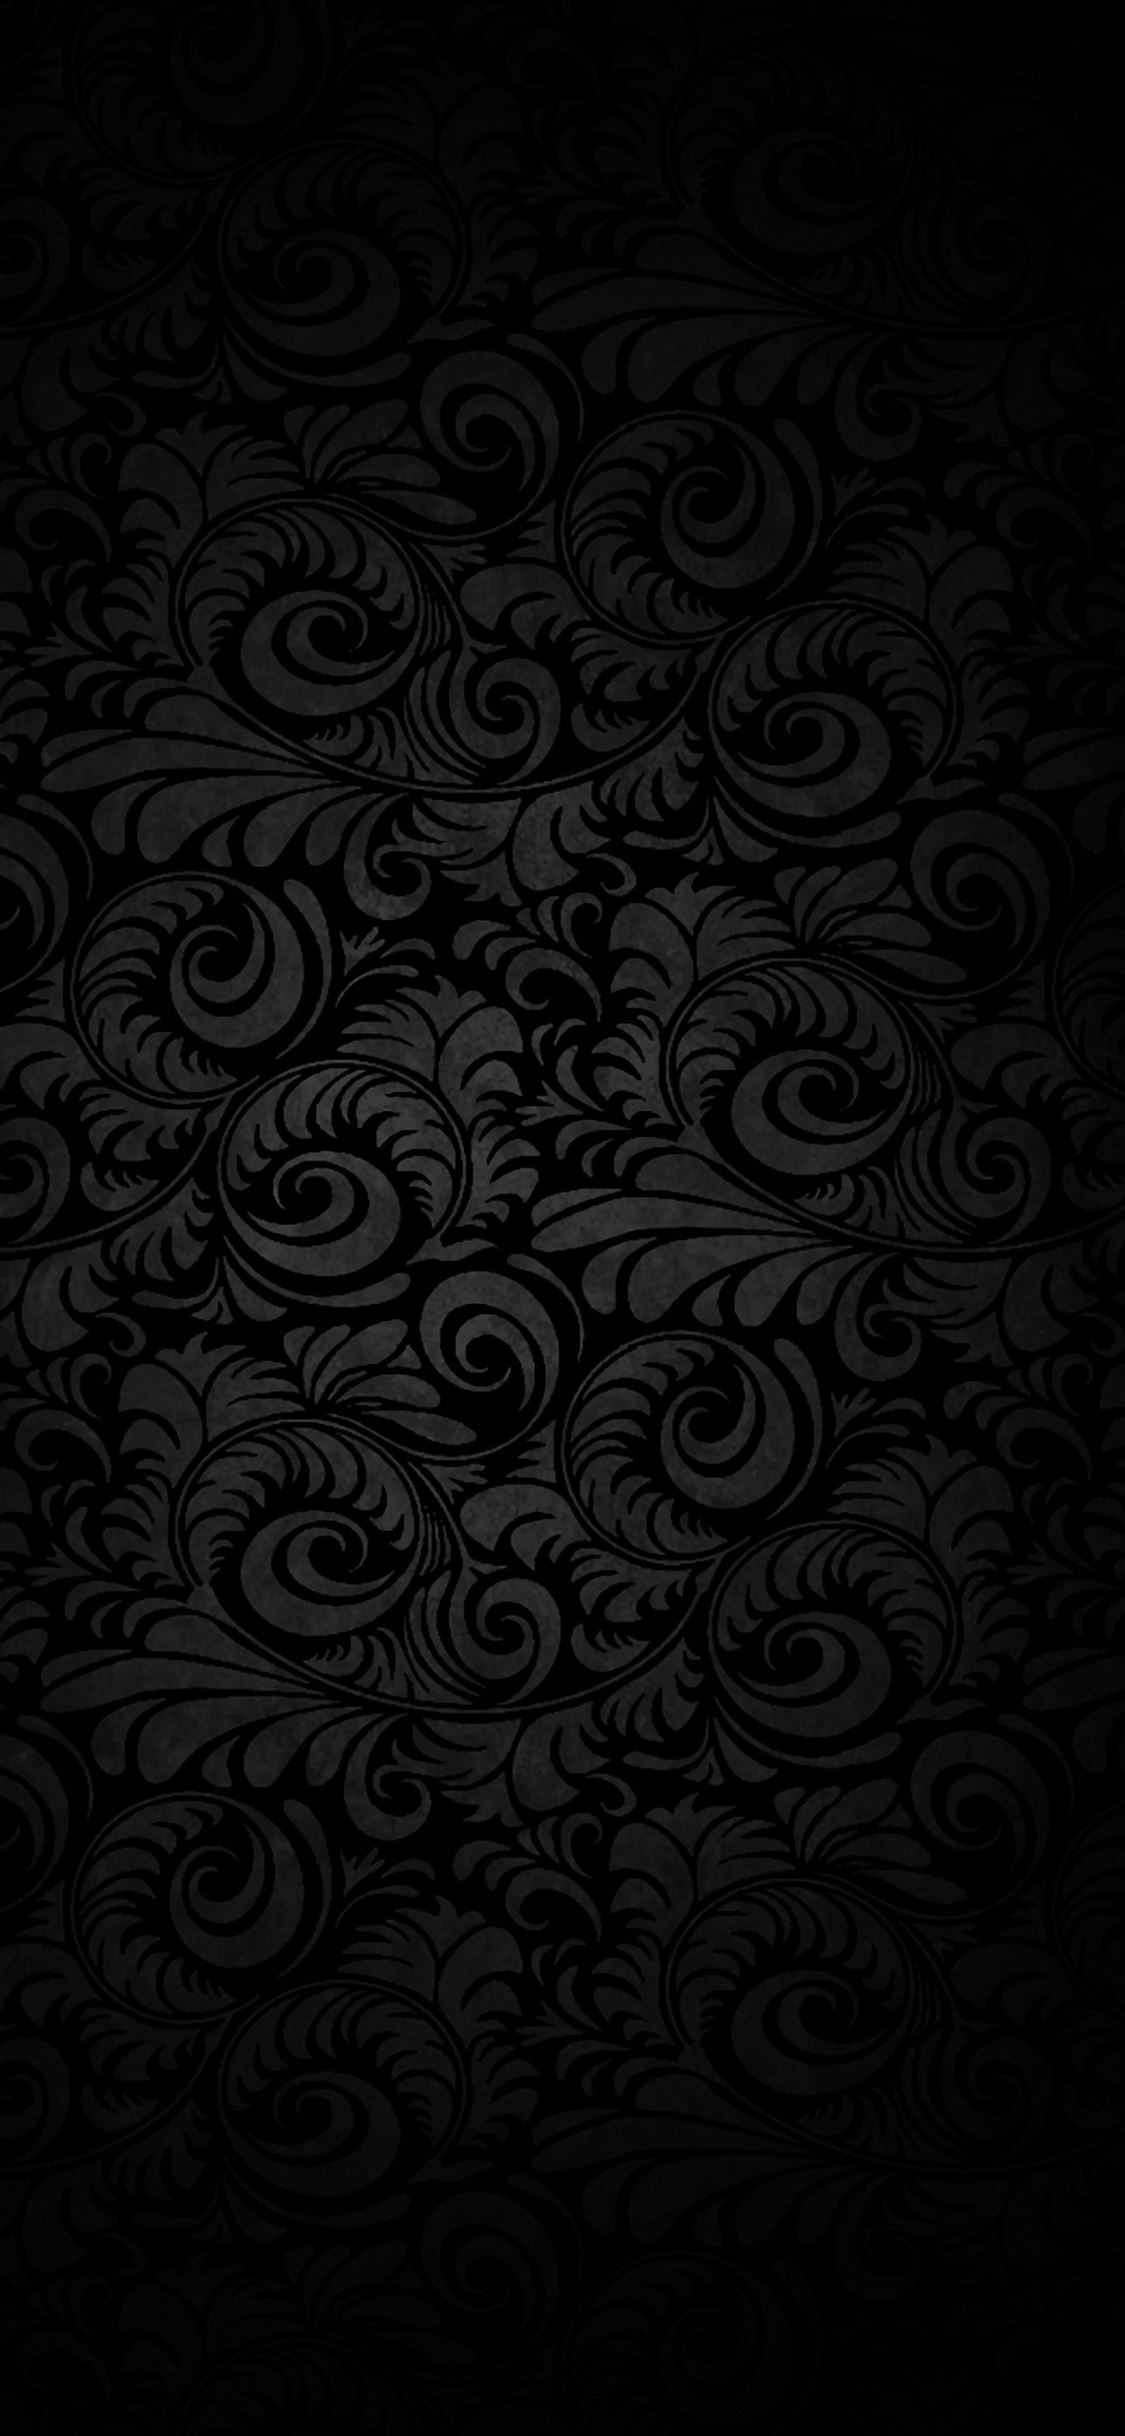 Dark patterned background iPhone wallpaper 